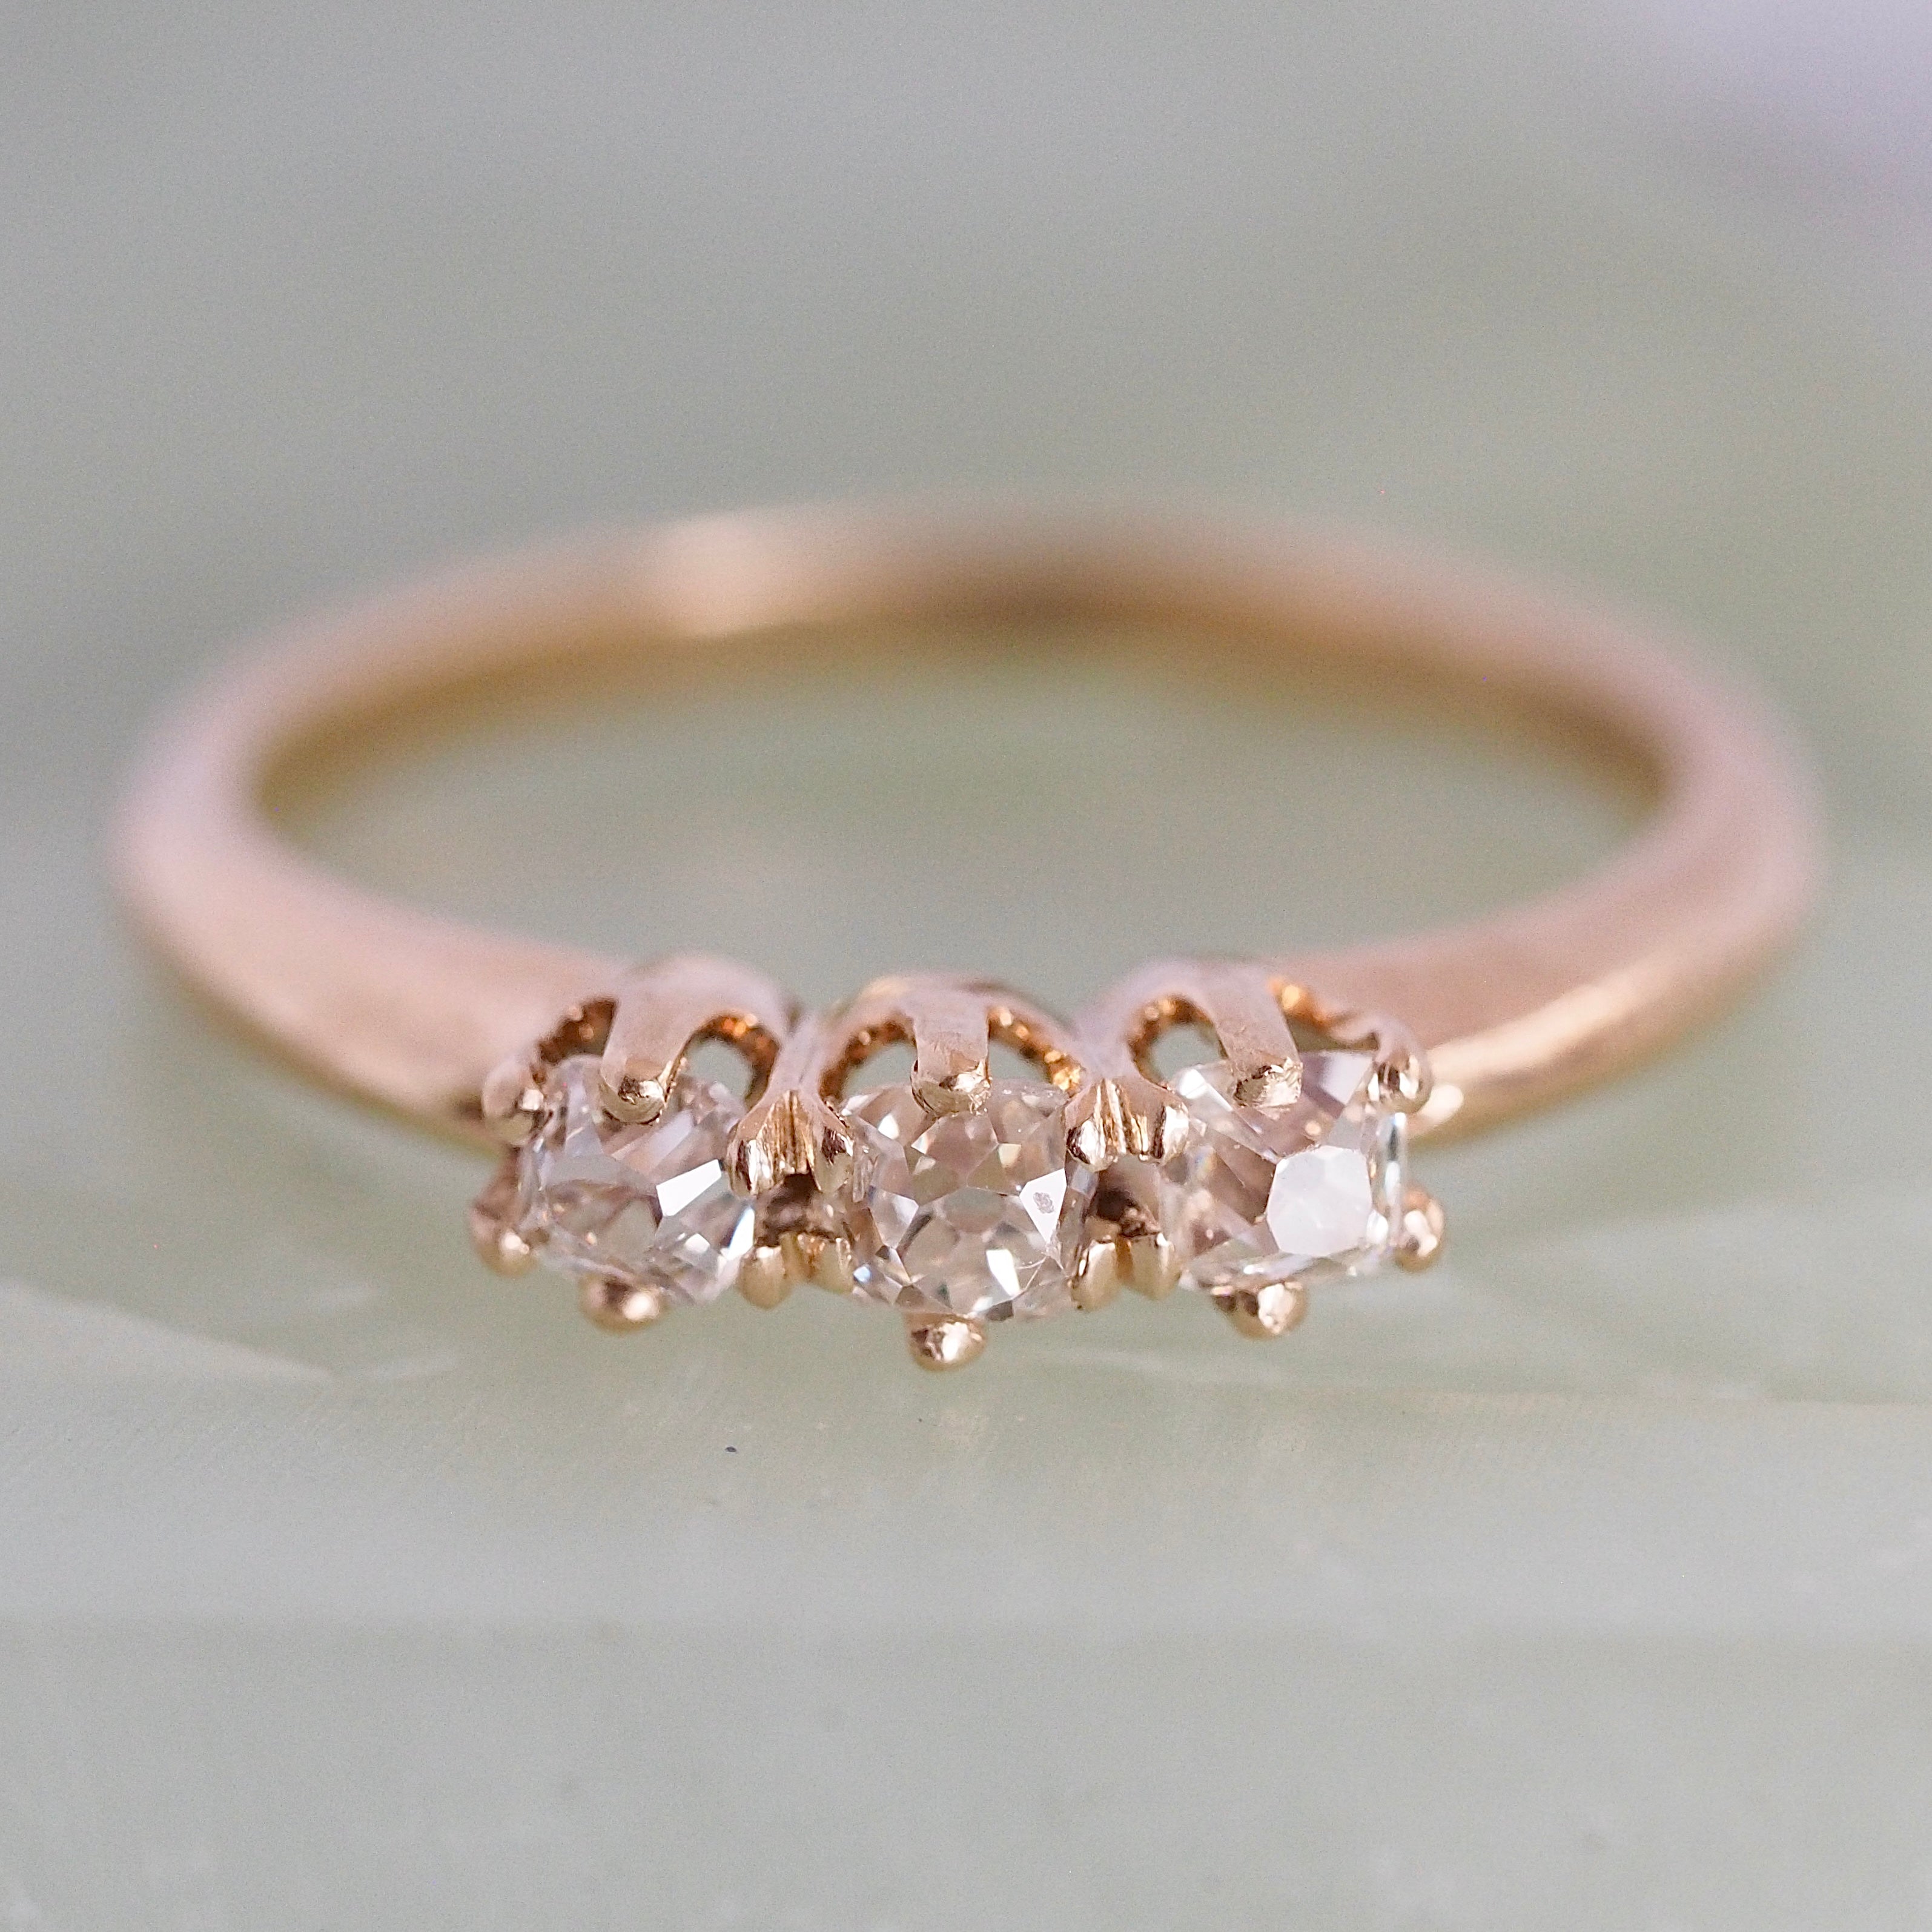 Antique 14k Gold Old Mine Cut Diamond Trilogy Engagement Ring